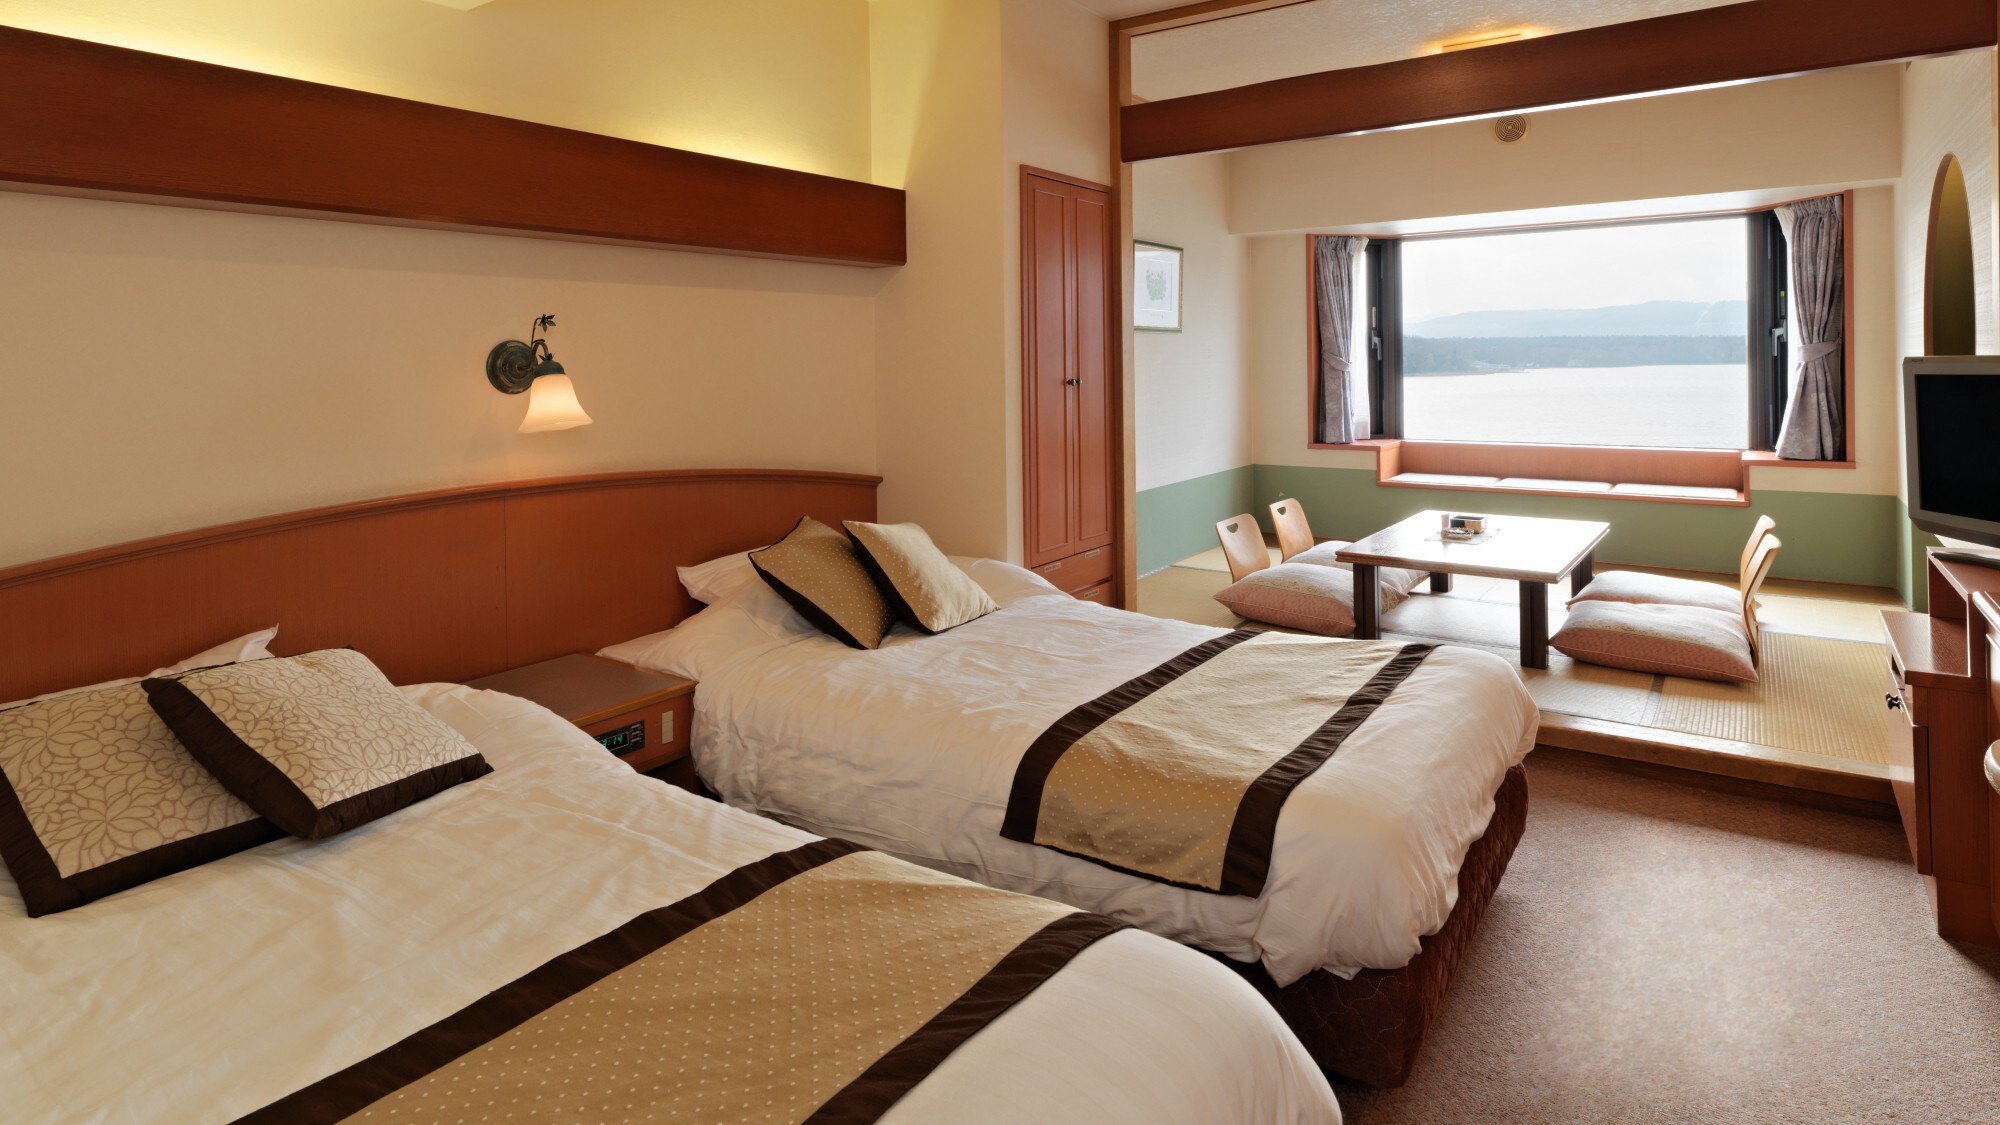 * [Lake side] Kamar bergaya Jepang-Barat / Kamar yang menggabungkan relaksasi kamar bergaya Jepang dengan kenyamanan kamar bergaya Barat. Anda dapat melihat Danau Akan dari jendela.